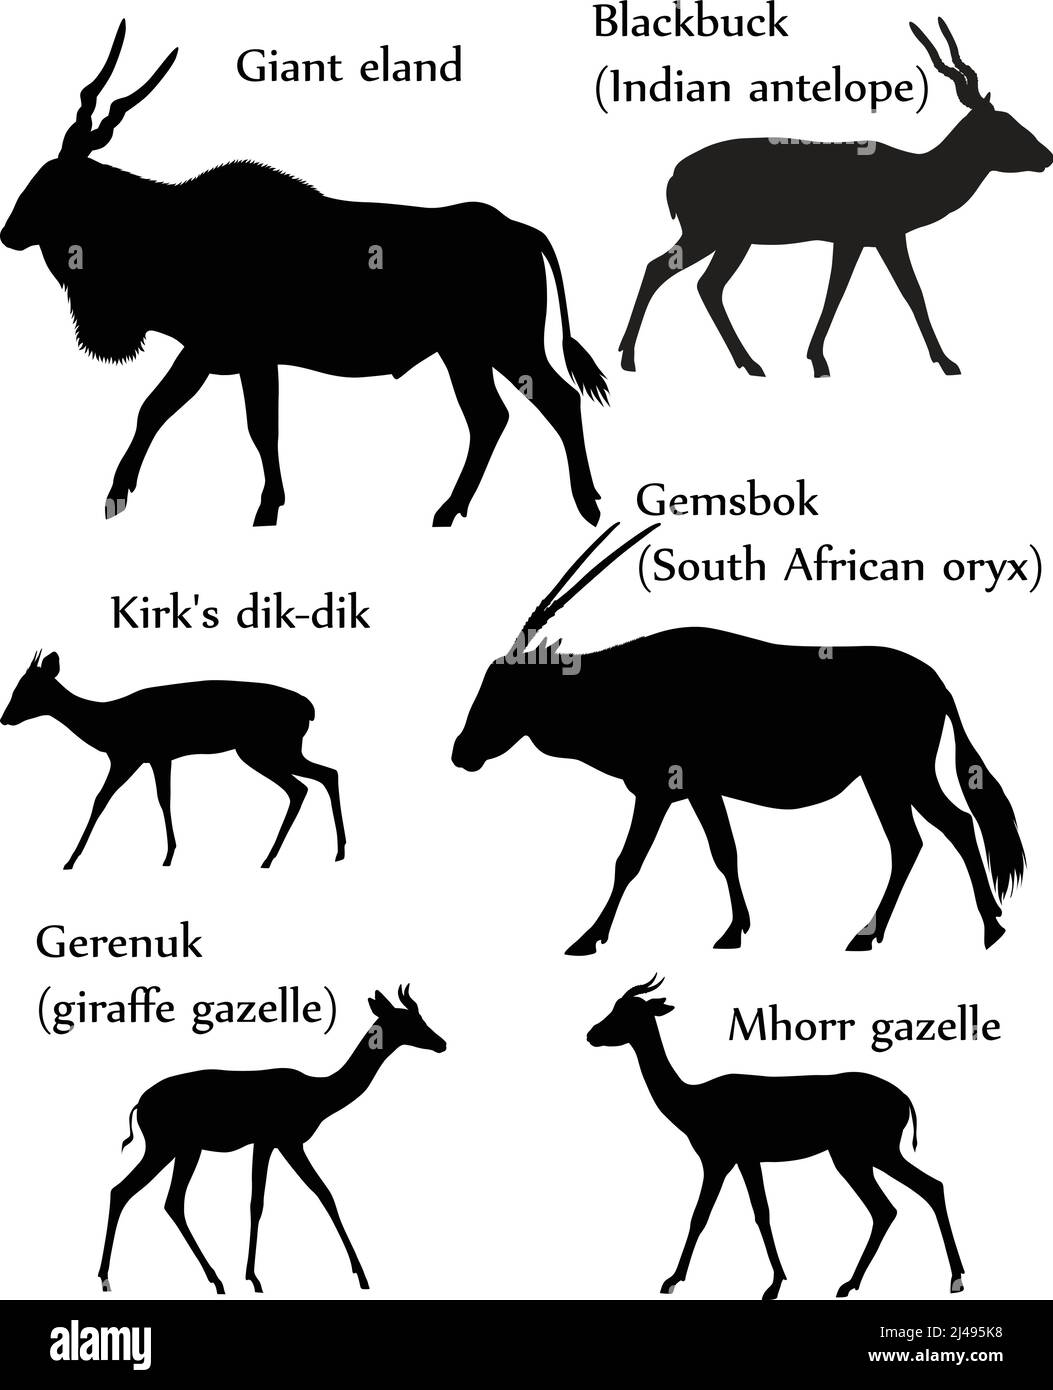 Sammlung verschiedener Antilopenarten in Silhouette: Rieseneland, Schwarzbock, Gemsbok, kirk's dik-dik, gerenuk, Mhorr Gazelle Stock Vektor